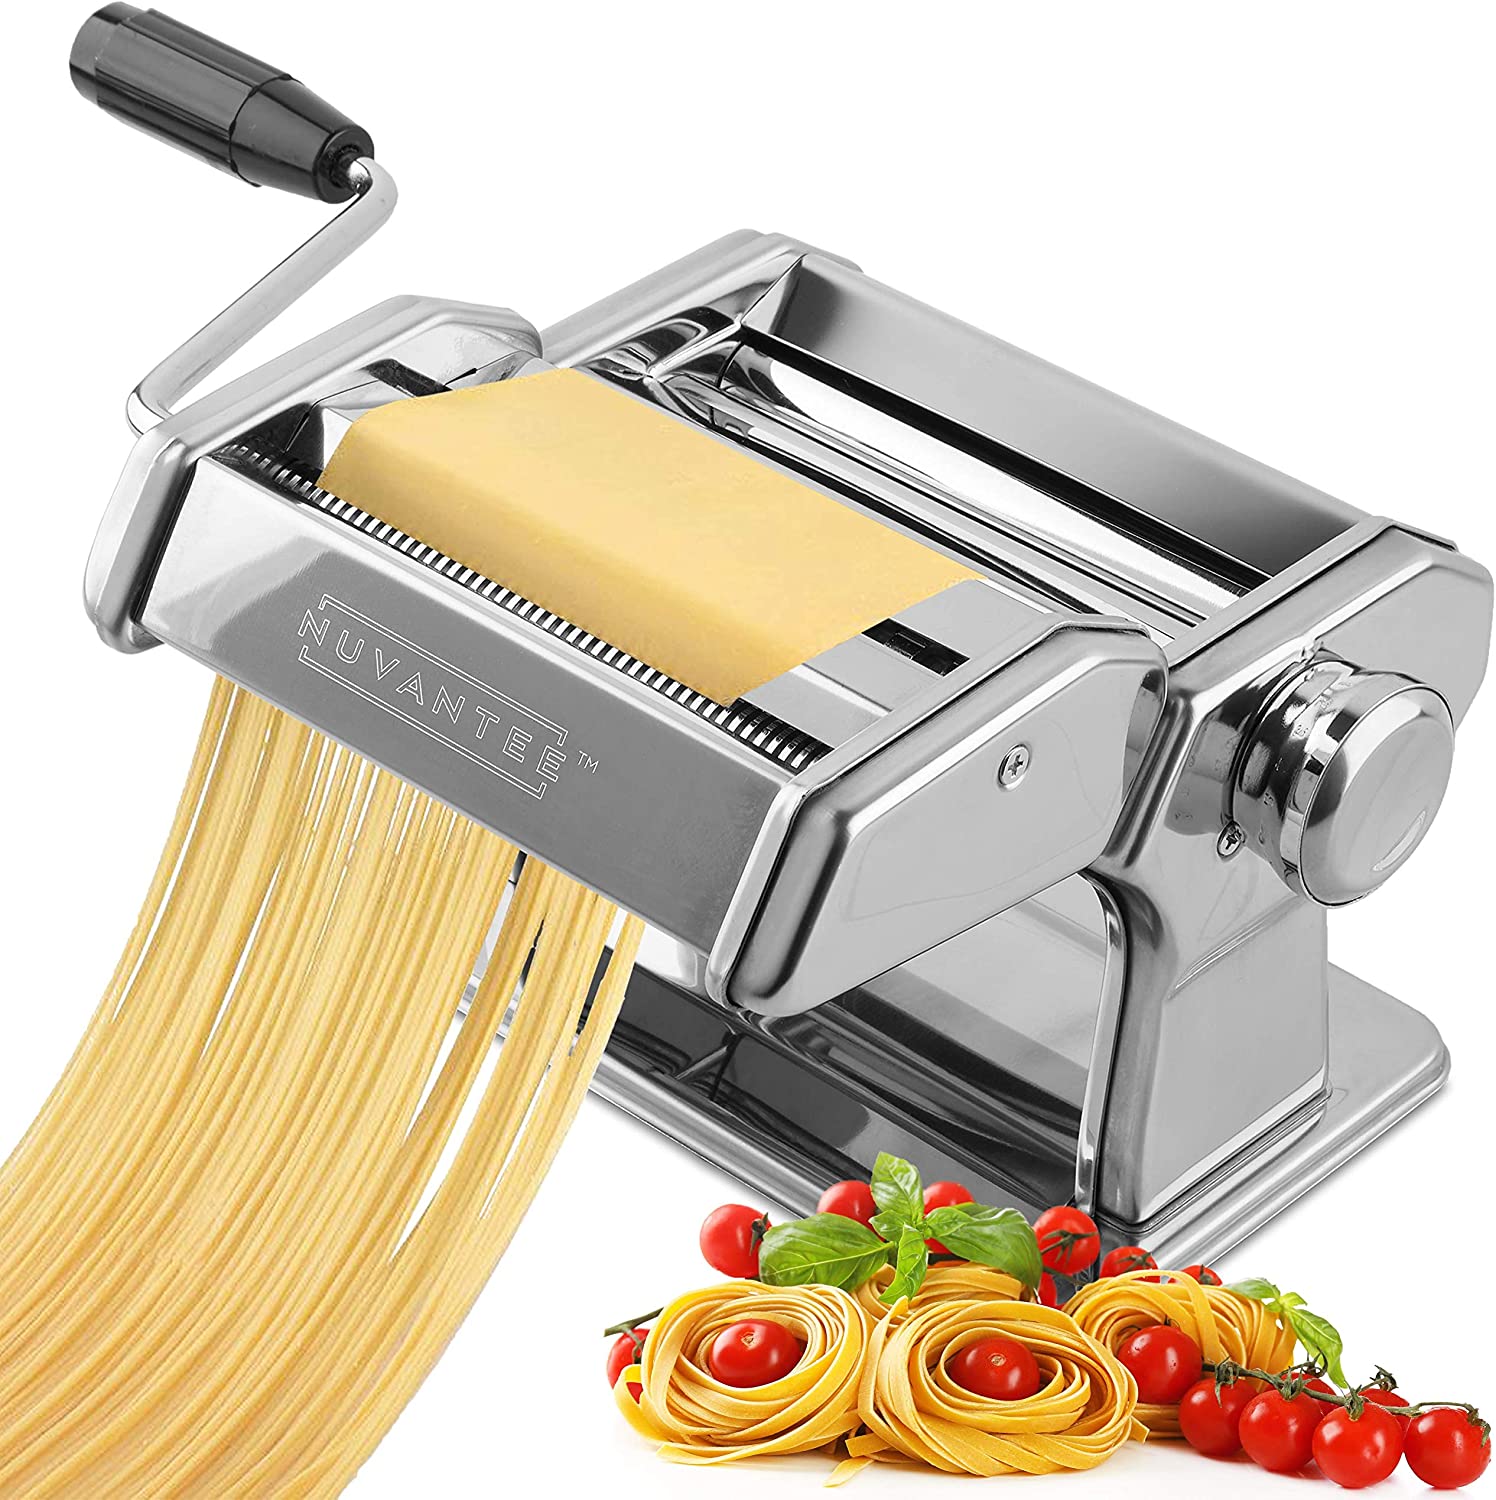 https://www.dontwasteyourmoney.com/wp-content/uploads/2021/08/nuvantee-adjustable-stainless-steel-manual-pasta-maker-pasta-maker.jpg